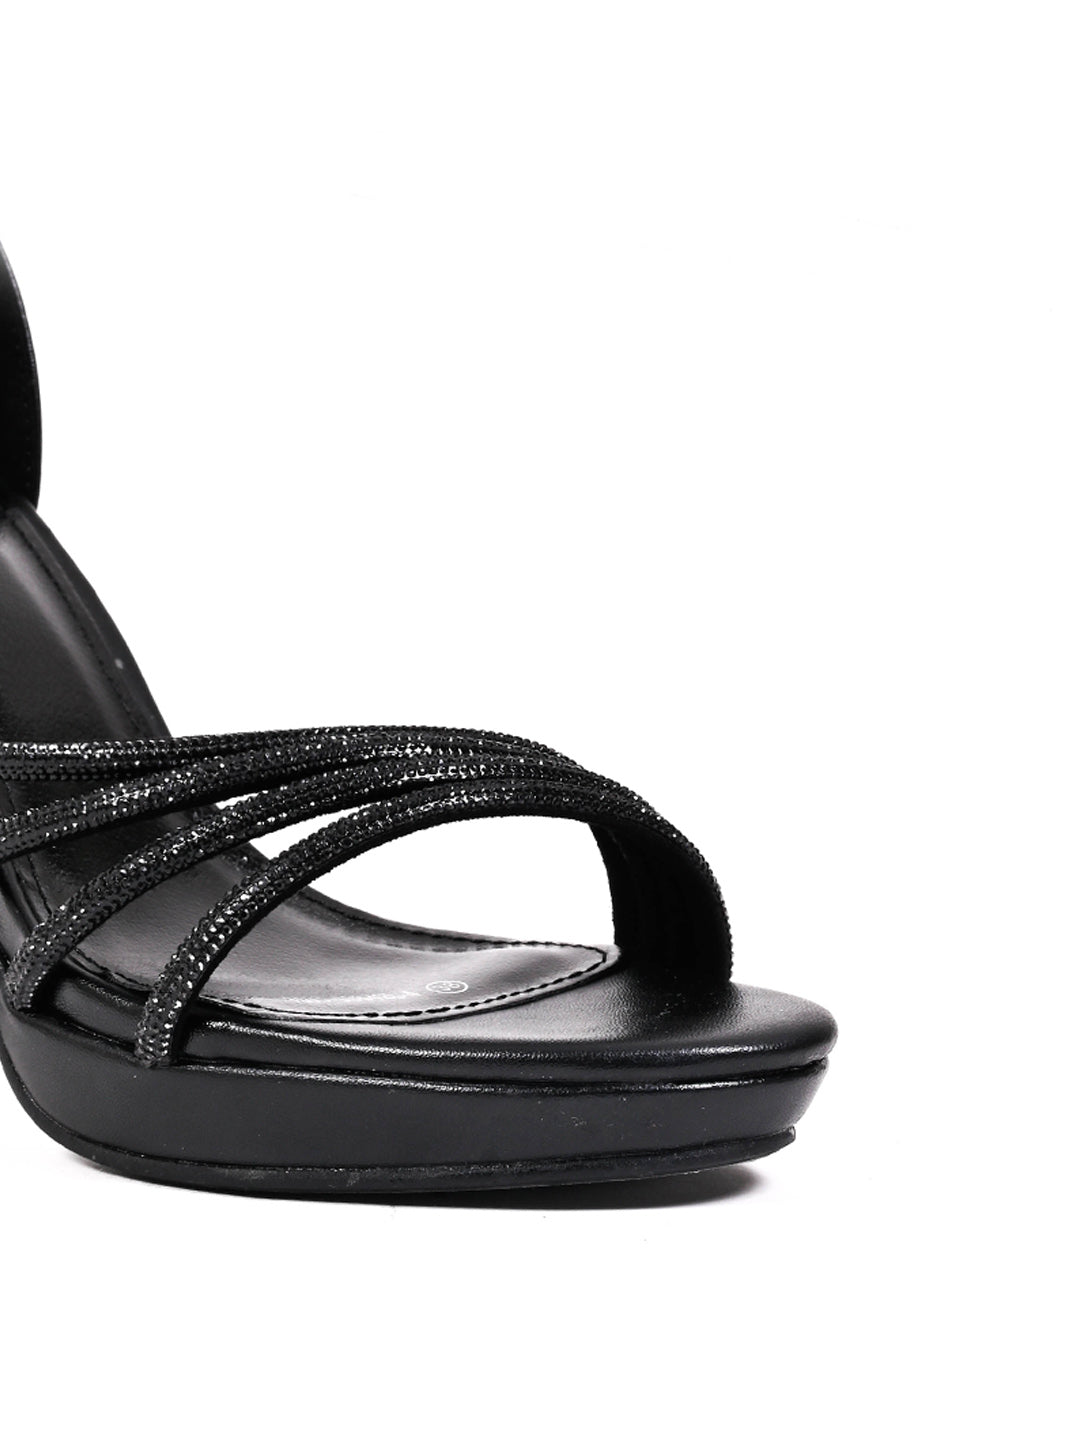 fcity.in - Fashion Gorgeous Ladies Slippers Casua Block Heel Women Sandals